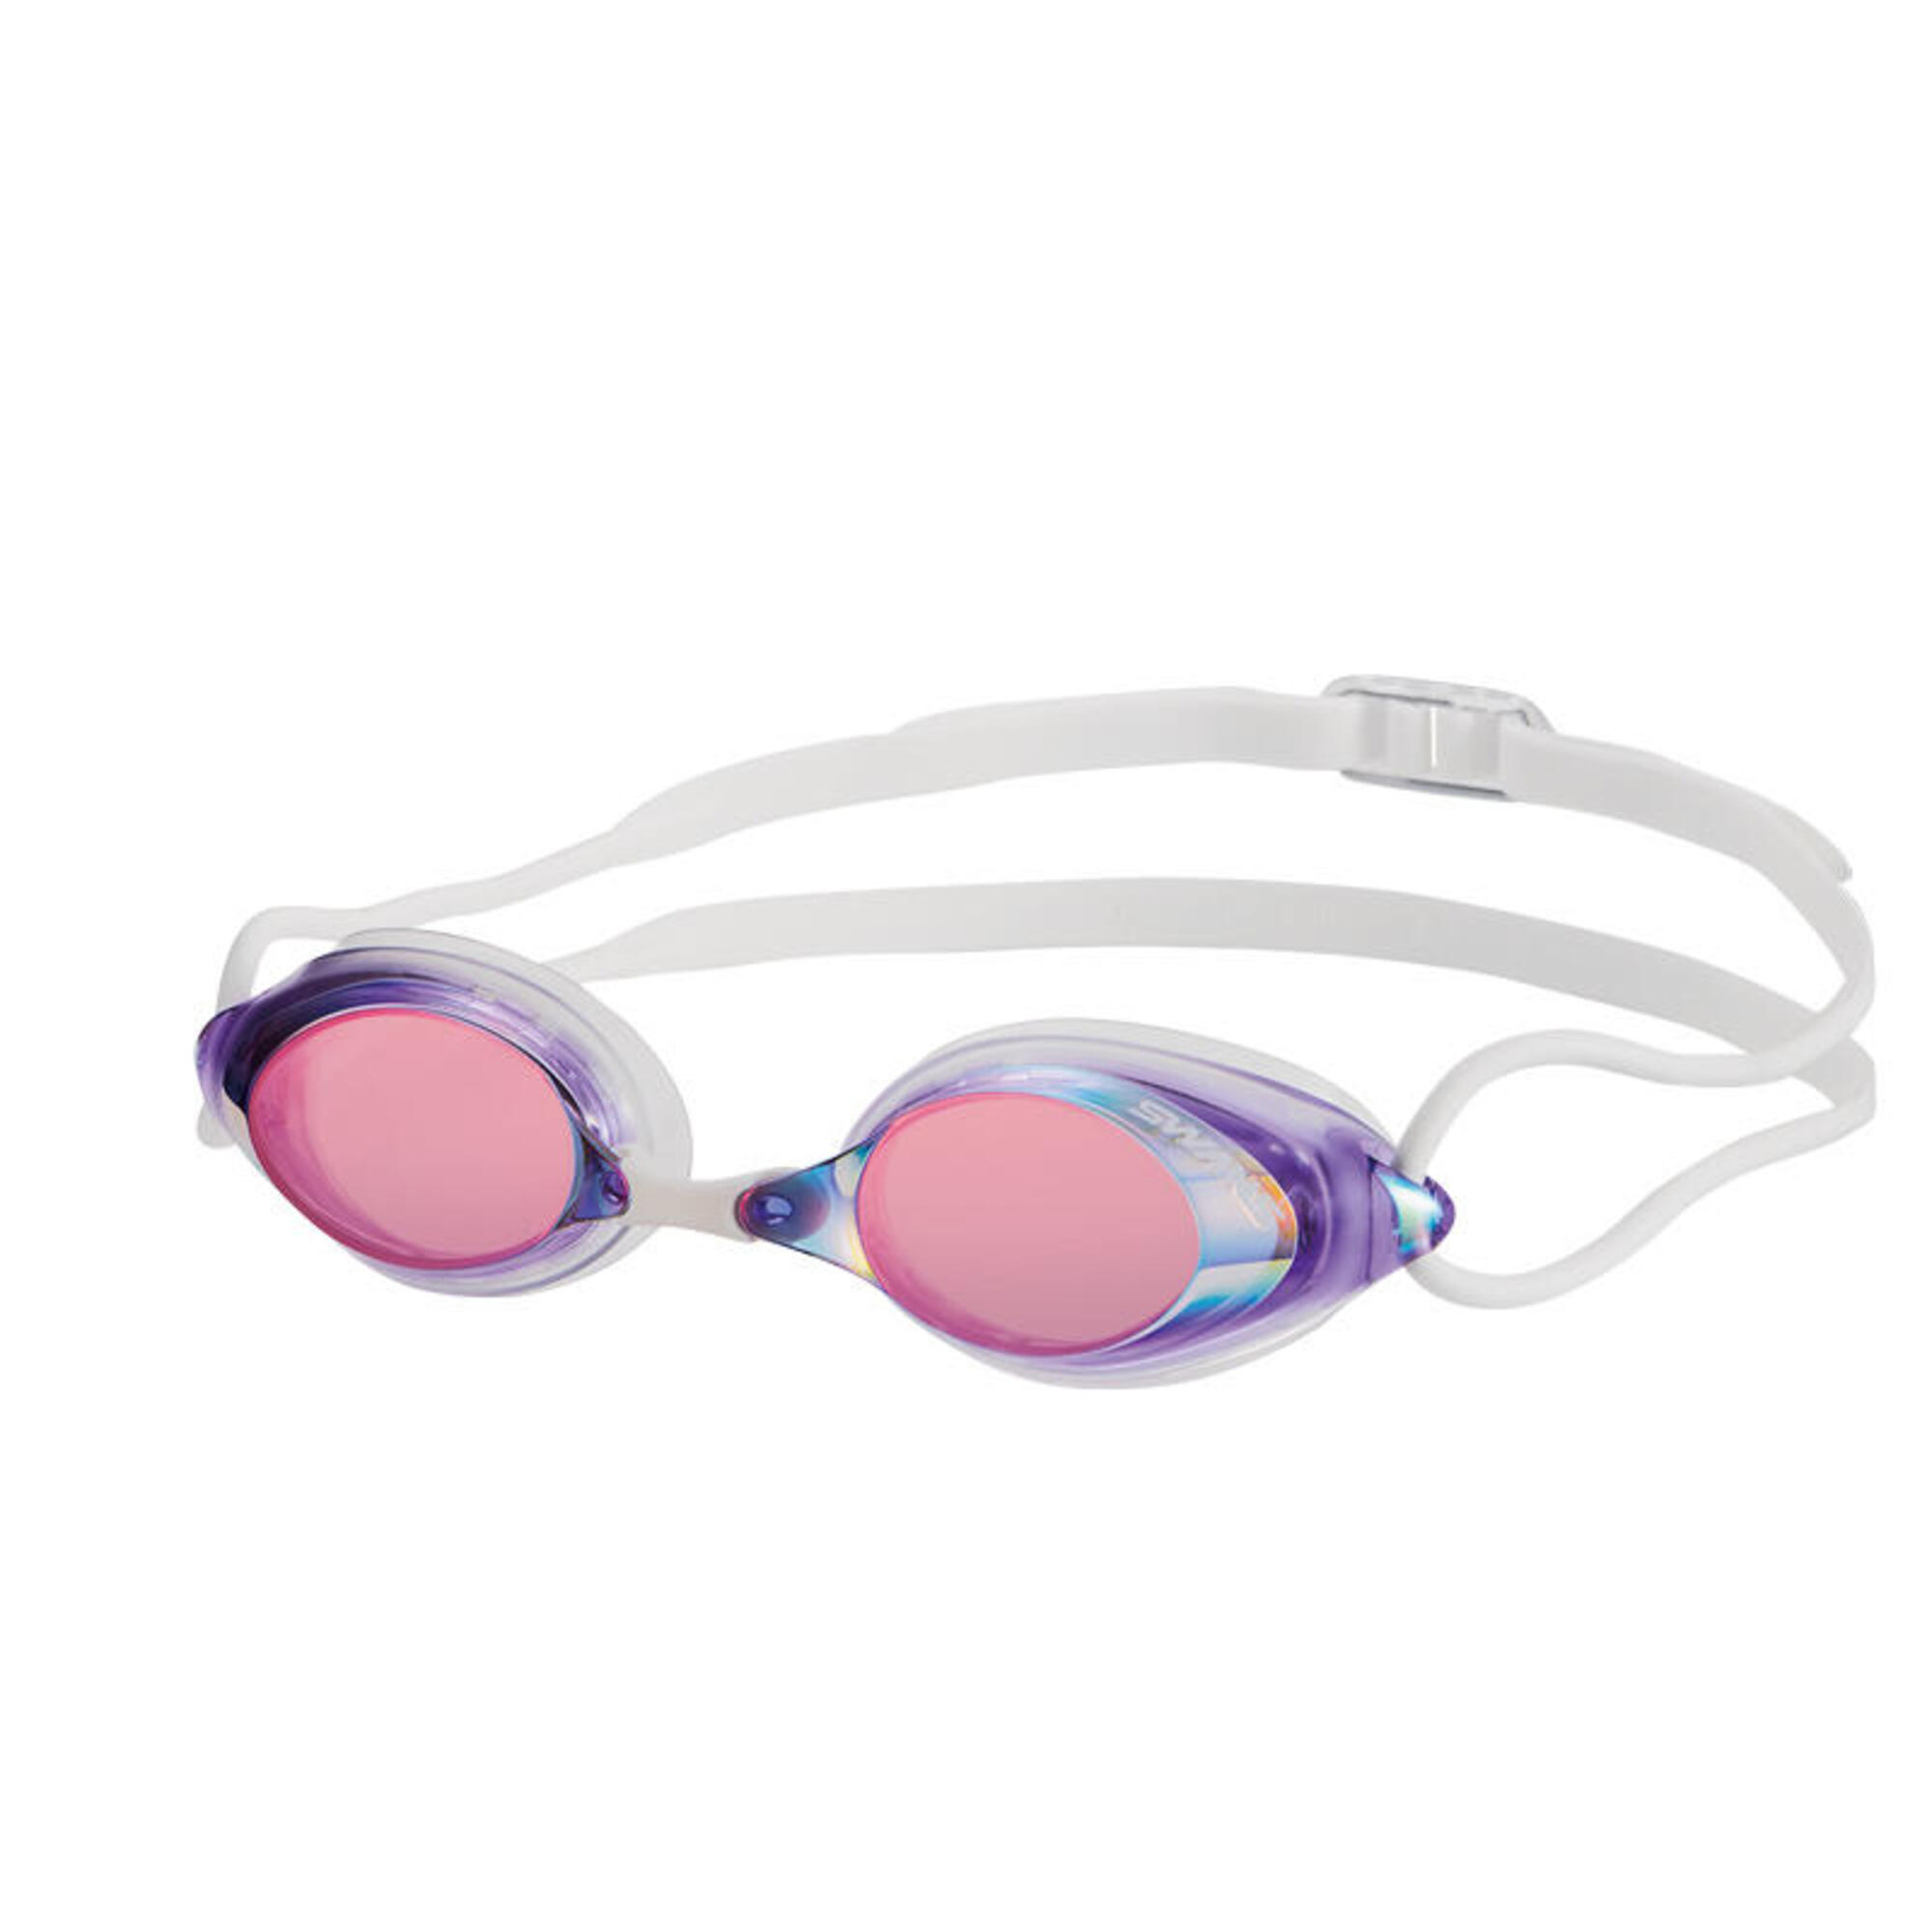 [SWN-SRXM] Mirrored Competition Swimming Goggles - Purple